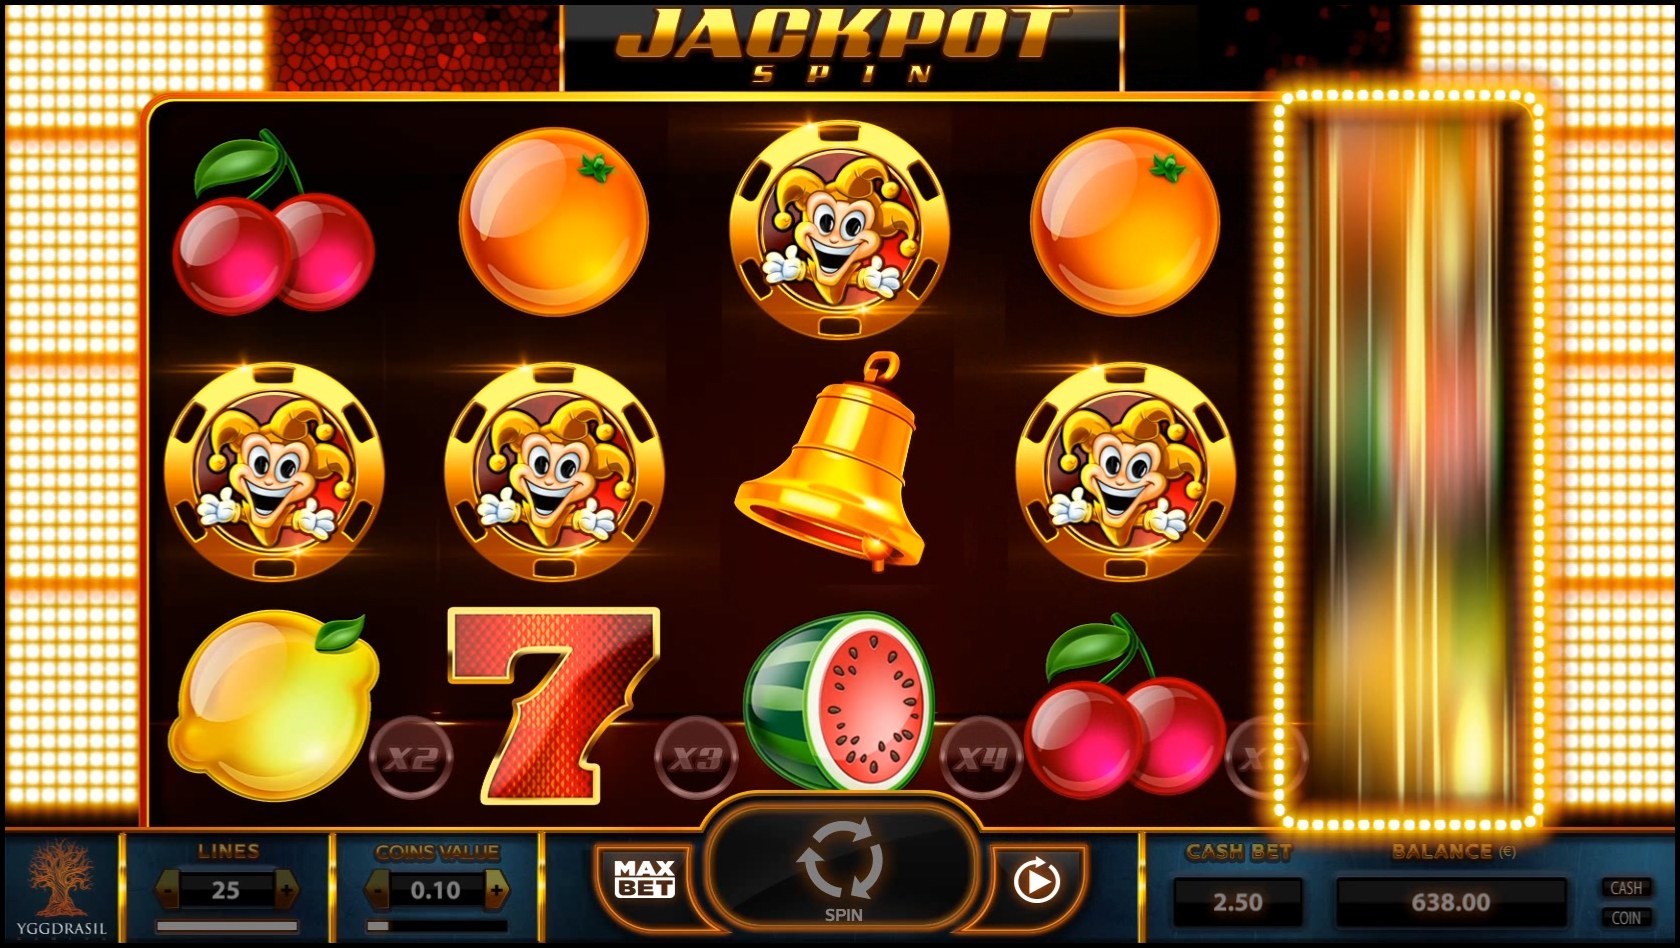 Joker Millions Slot is the first progressive jackpot slot